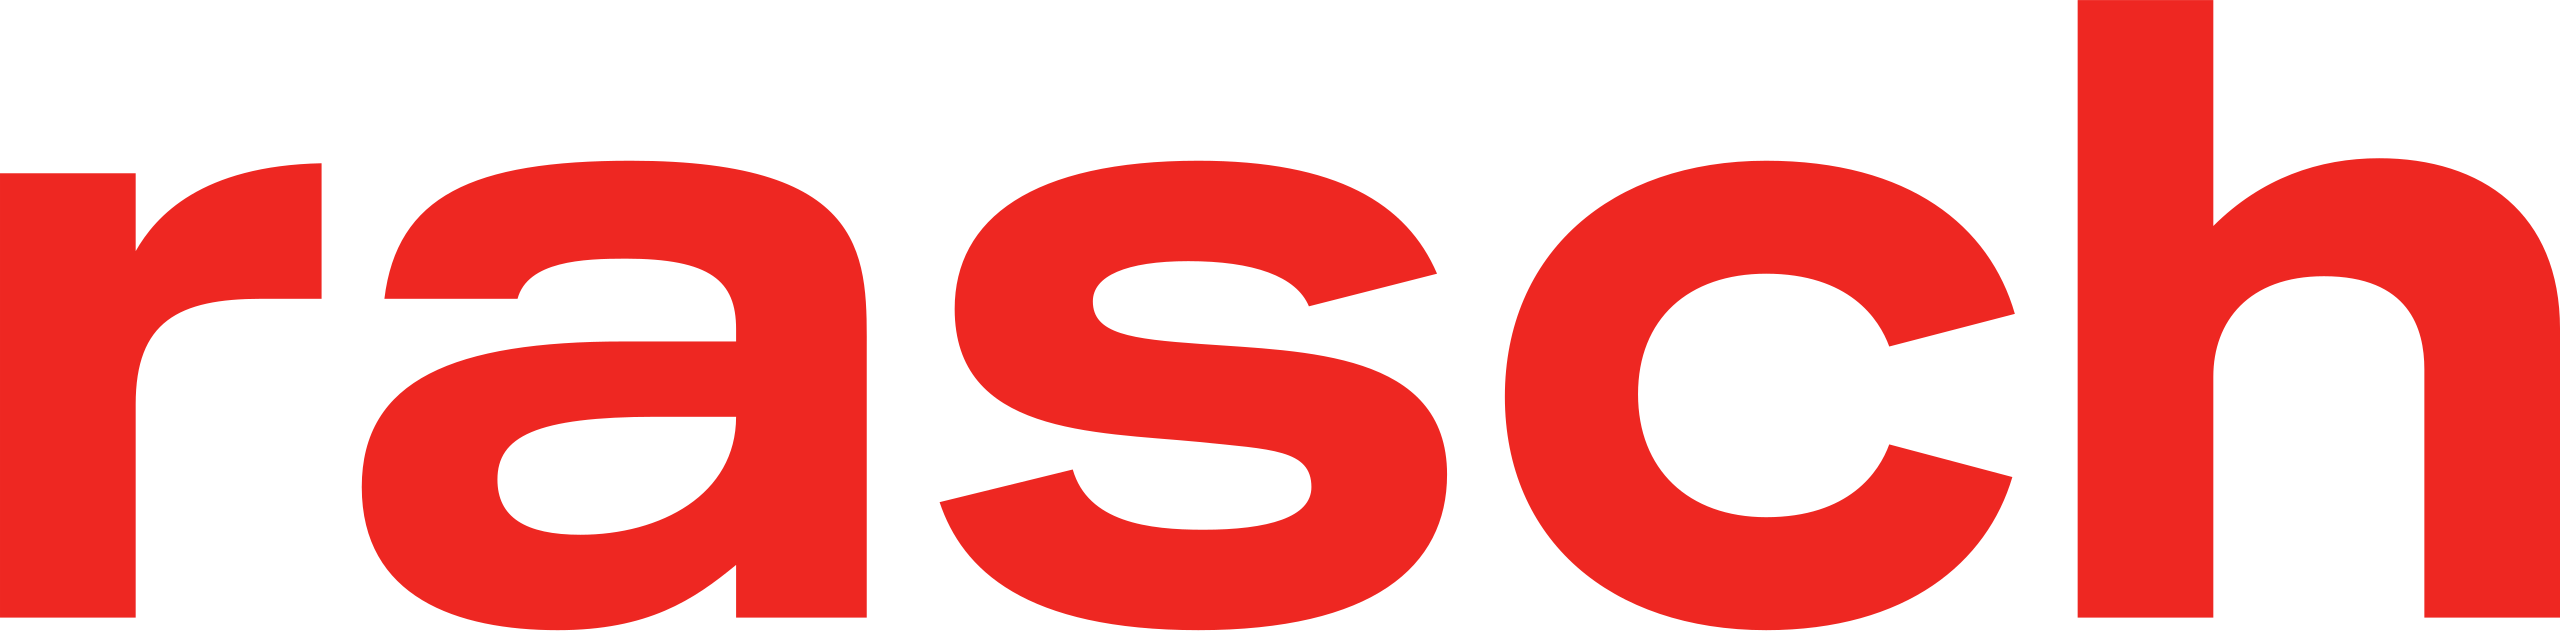 2560px-Rasch_logo.svg